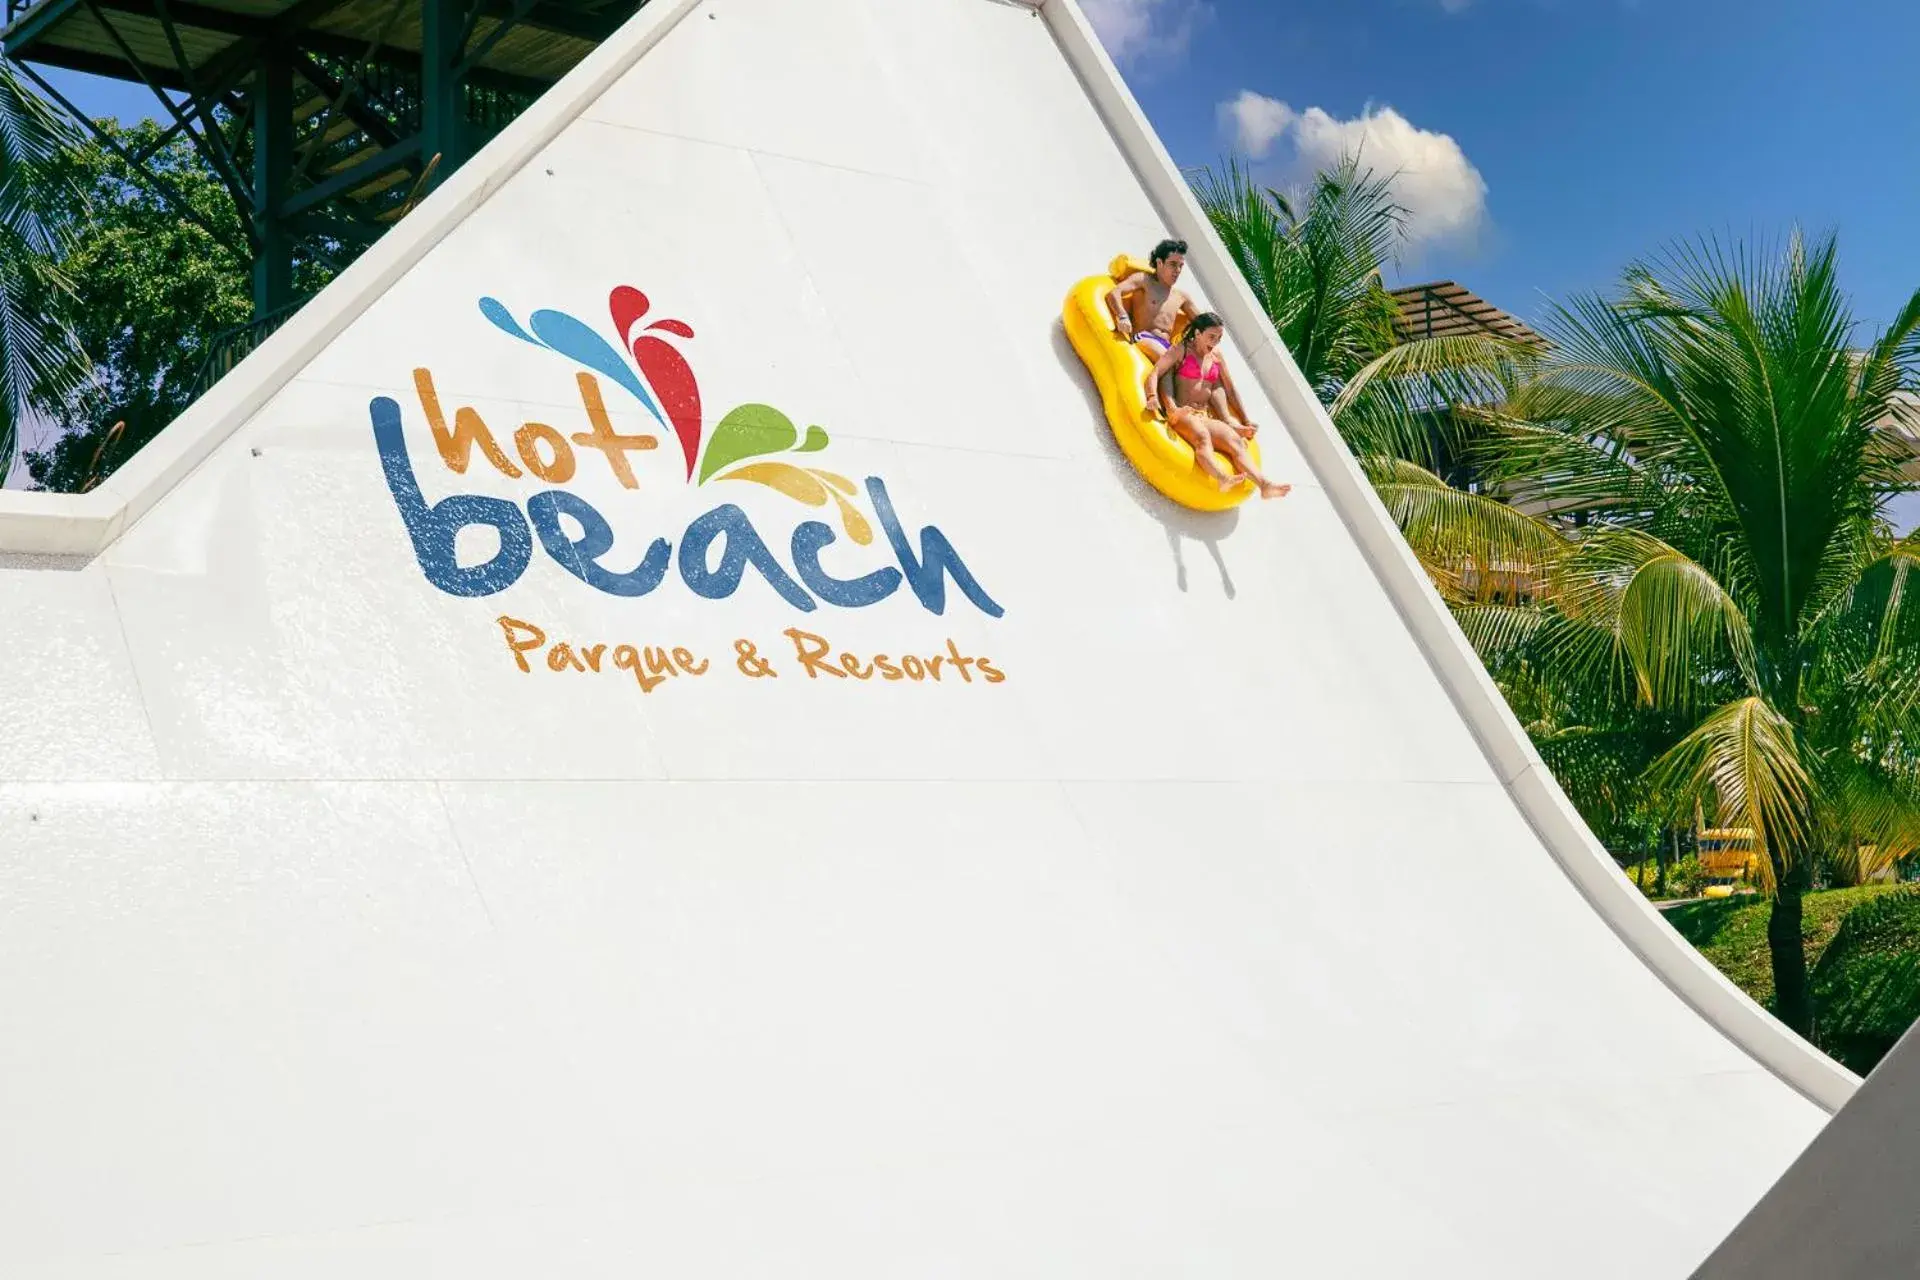 Aqua park, Property Logo/Sign in Hot Beach Resort